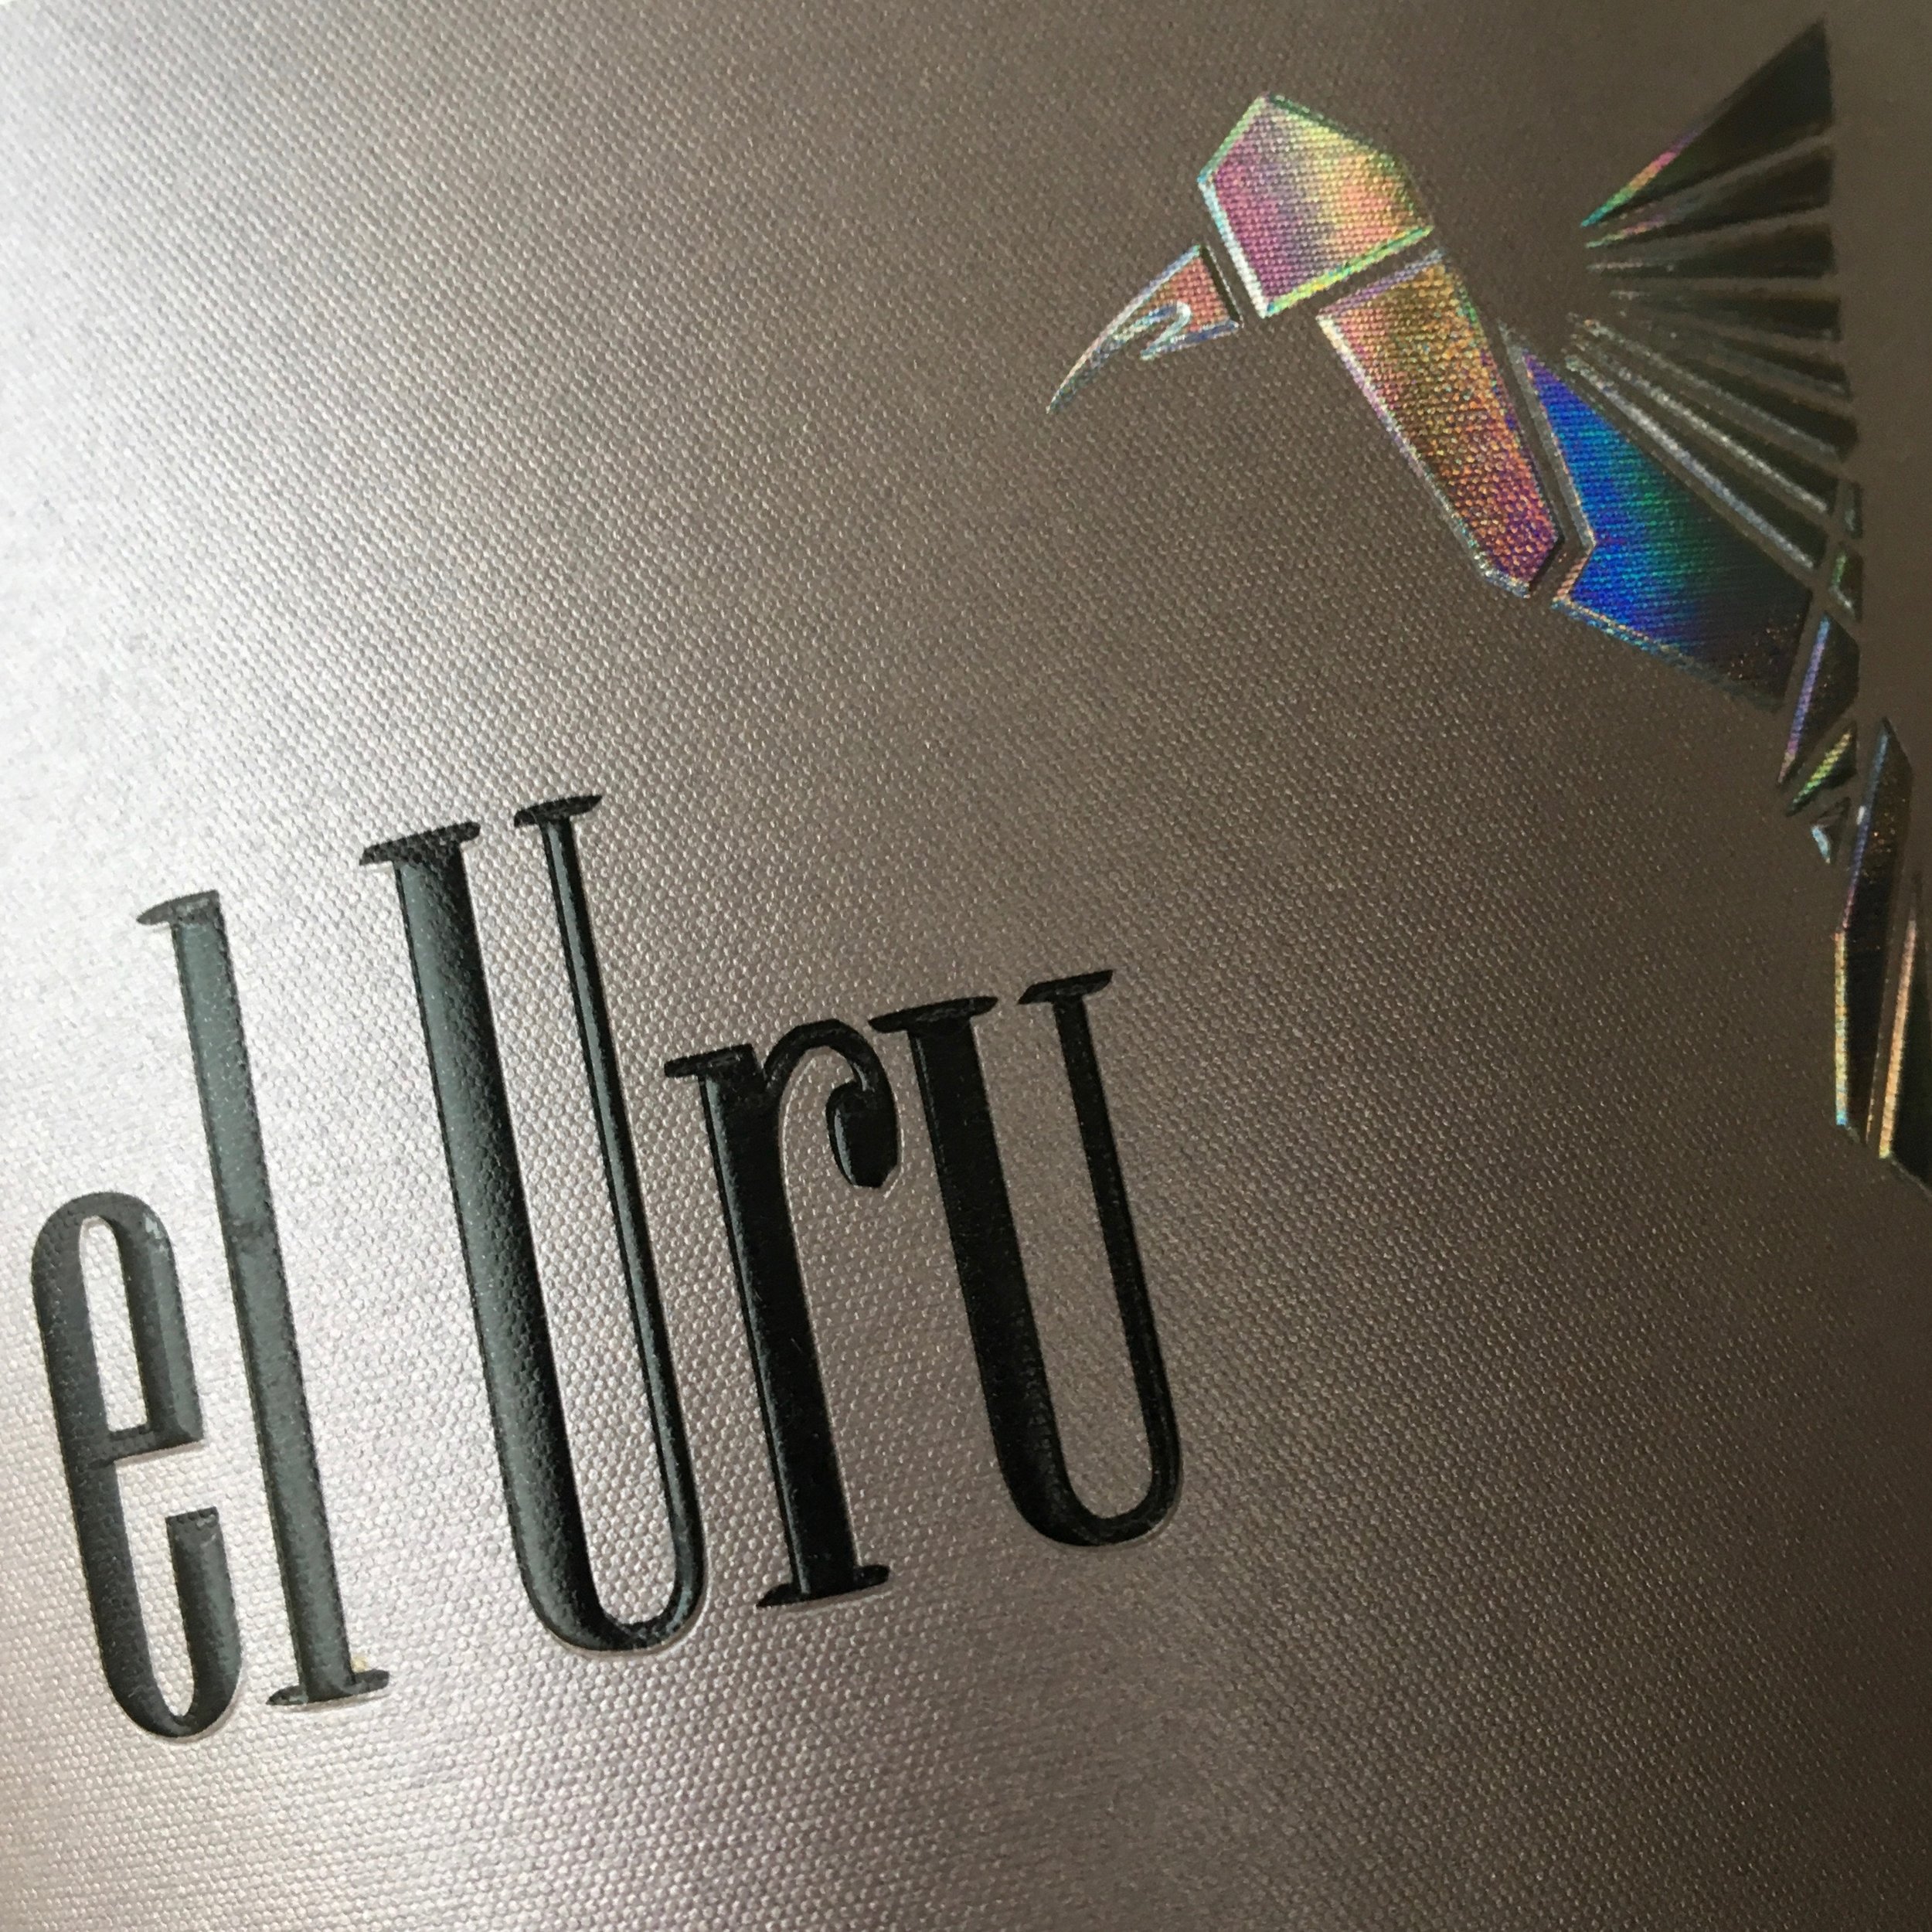 Uruguayan Wine Label Design Utilising Geometric Forms and Three-Dimensional Holographics